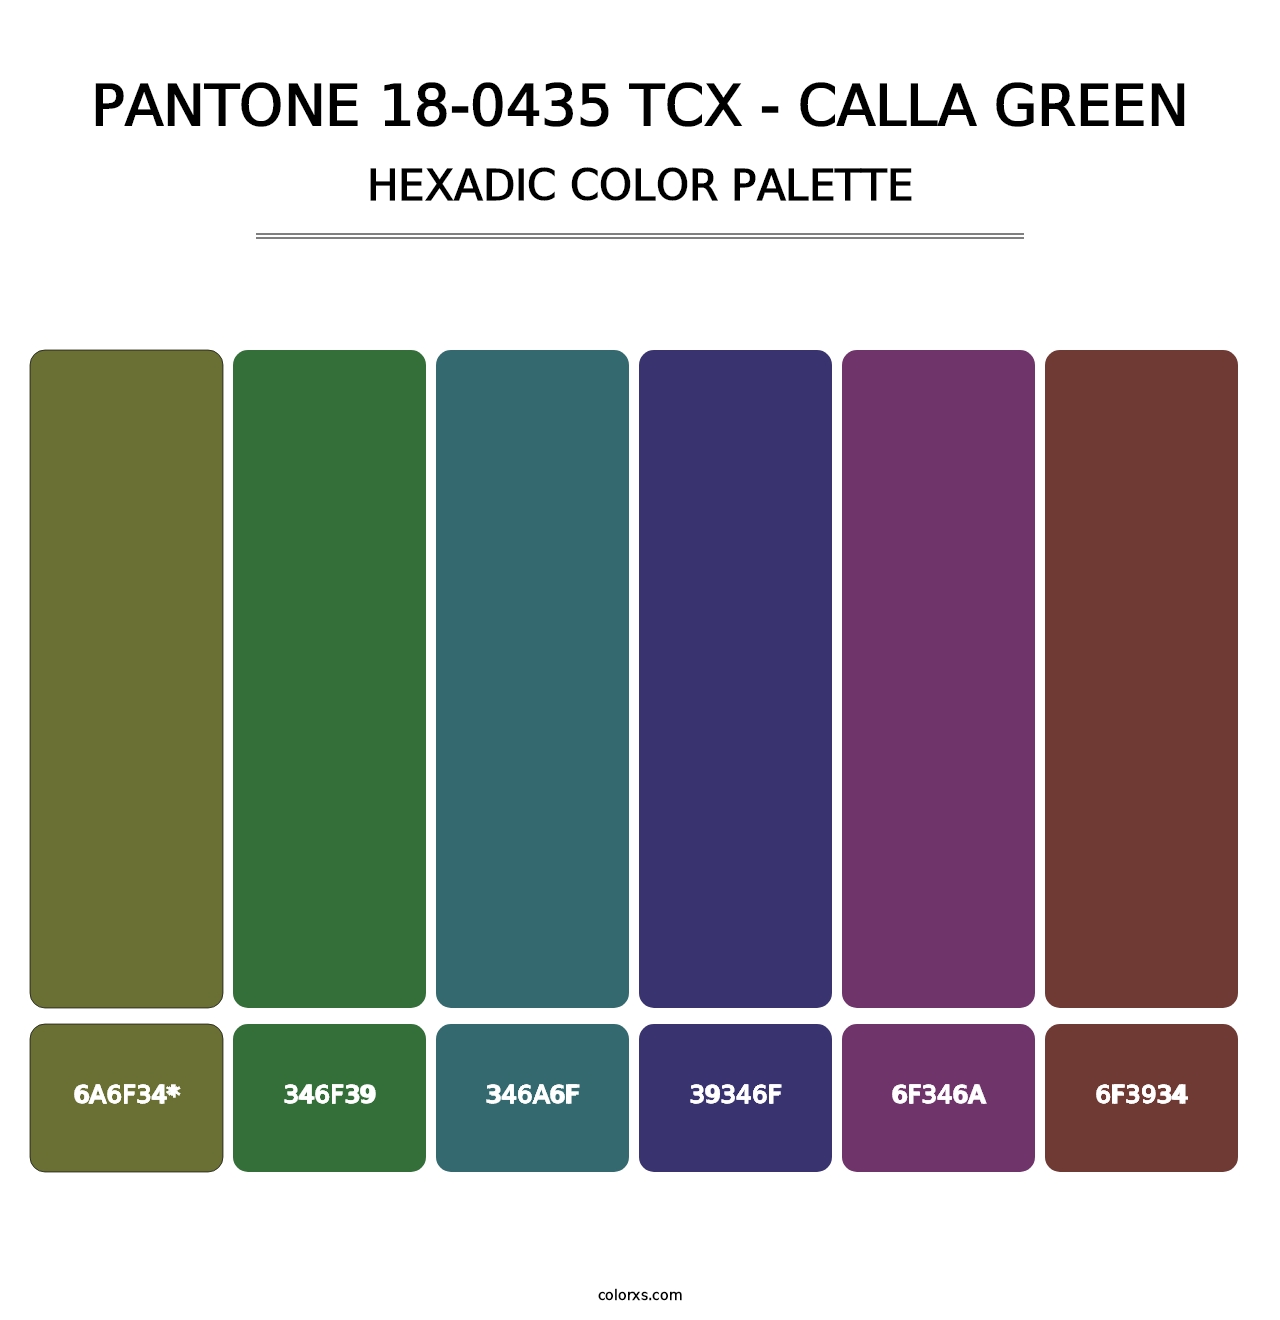 PANTONE 18-0435 TCX - Calla Green - Hexadic Color Palette